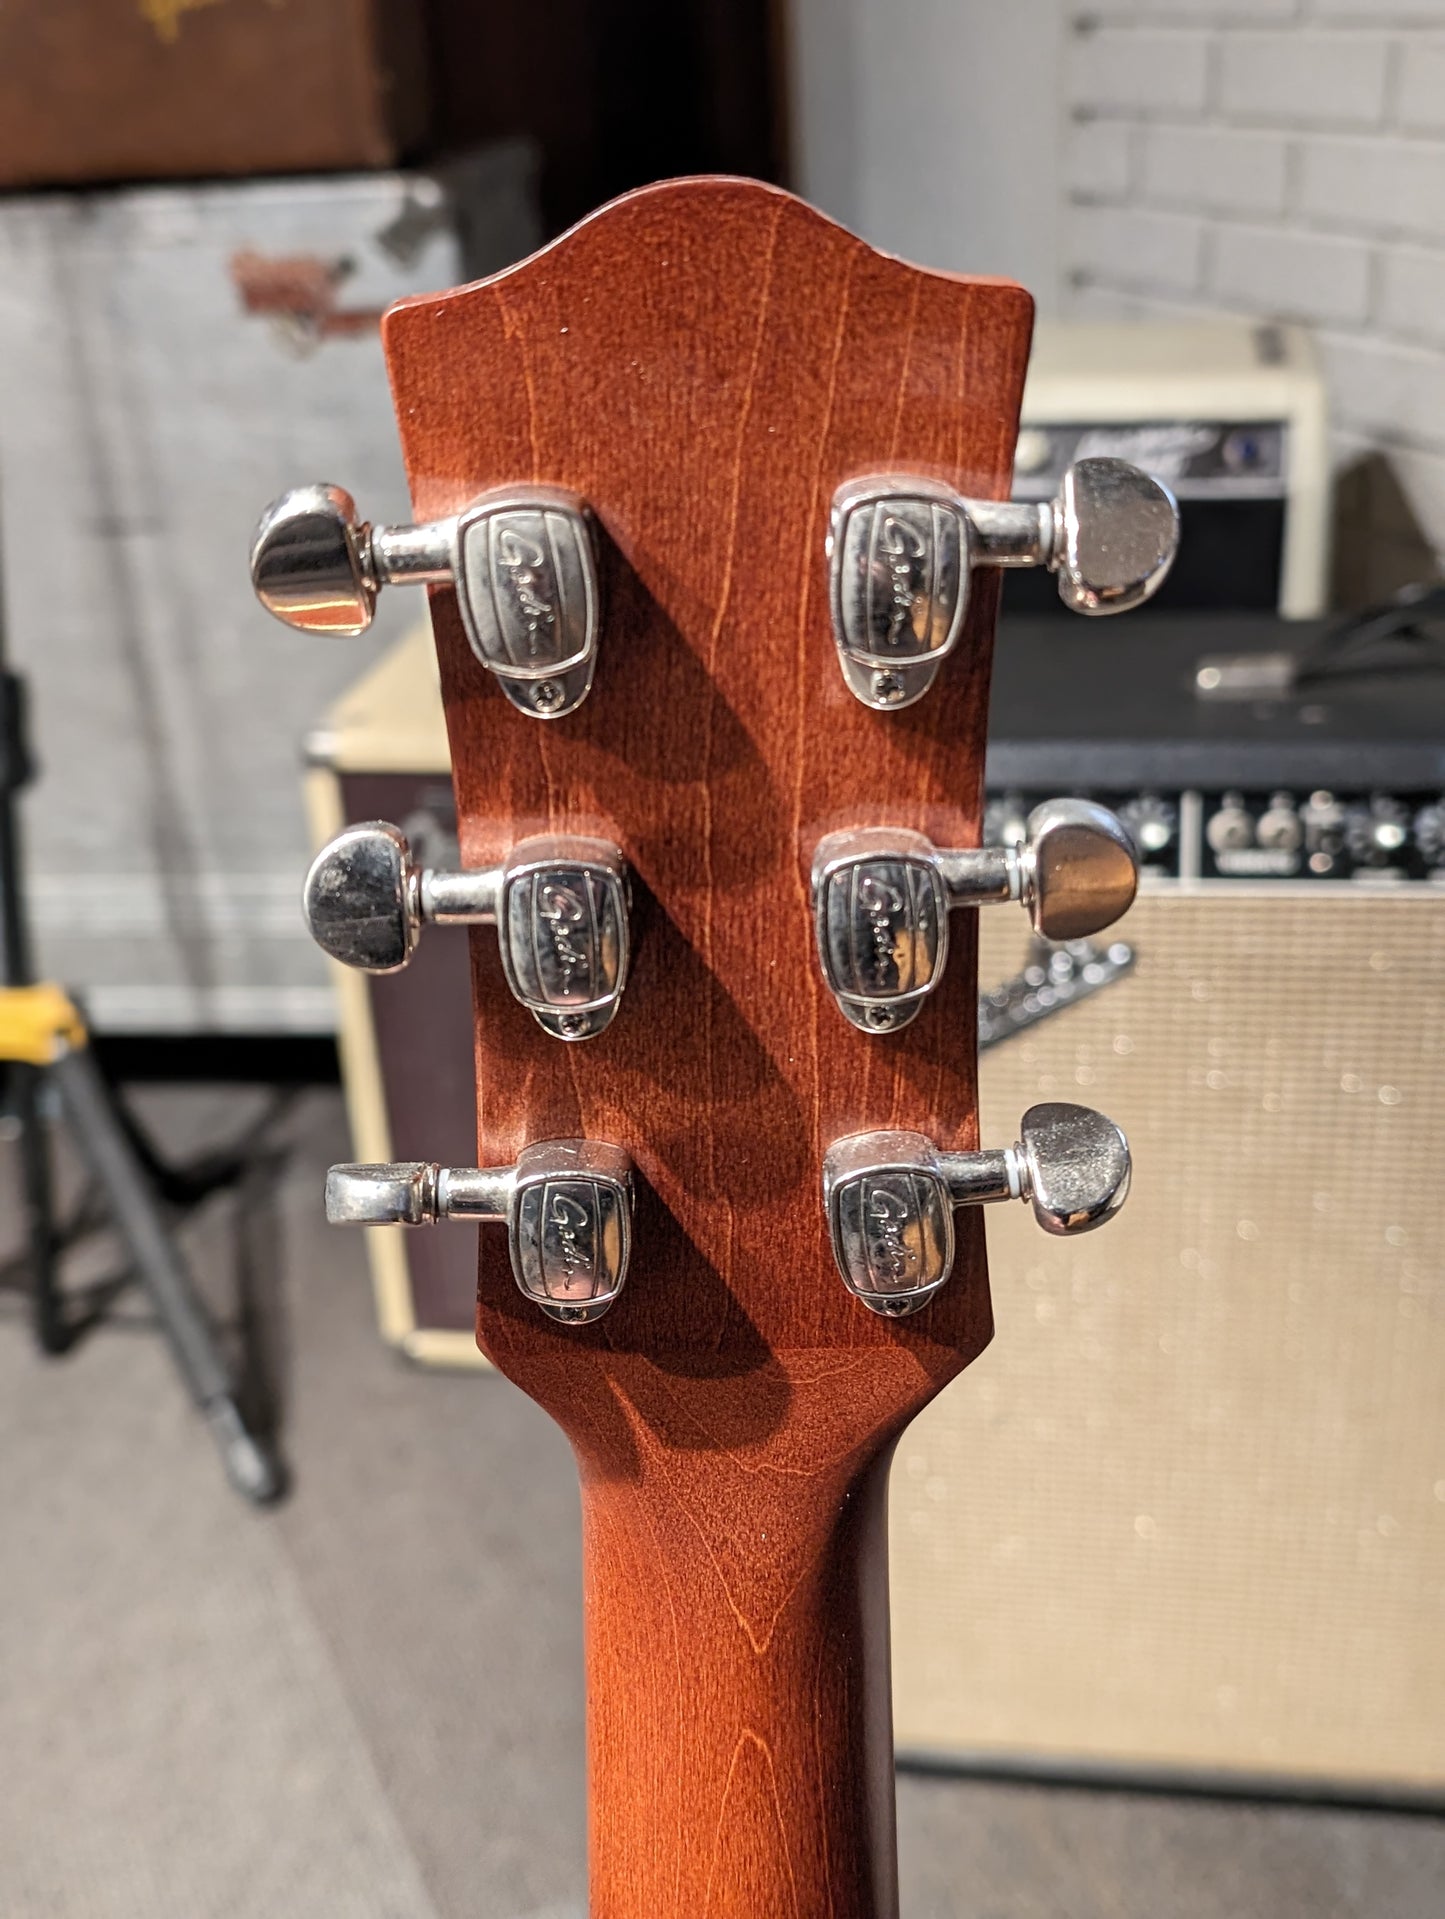 Godin 5th Avenue Kingpin P90 Hollow Body Electric Guitar w/Case - Cognac Burst (Used)